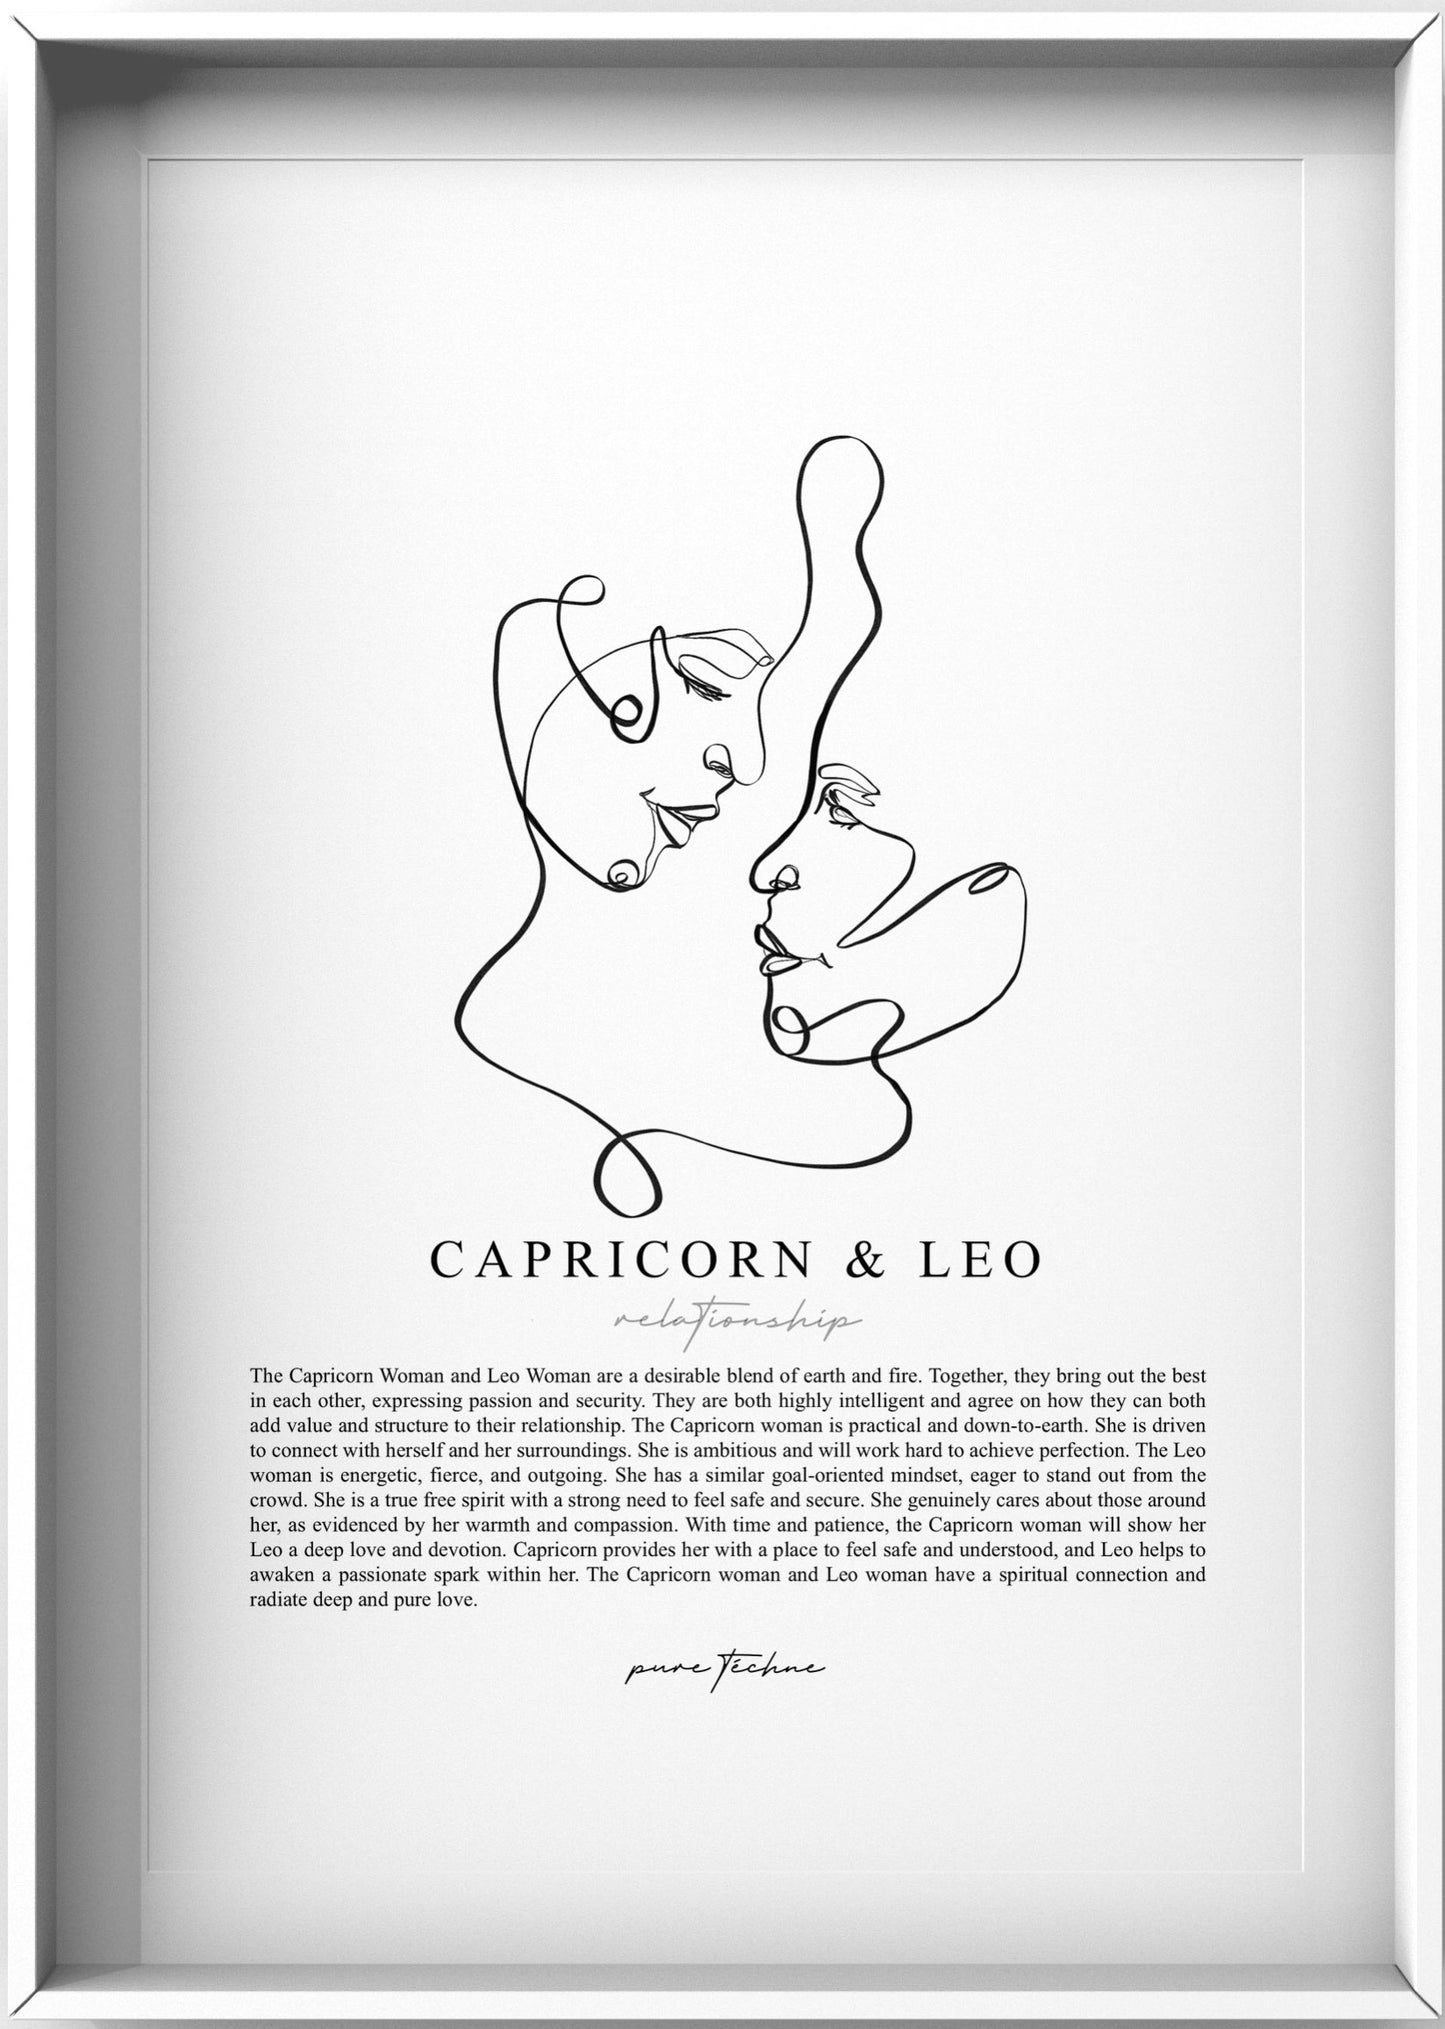 Capricorn Woman & Leo Woman